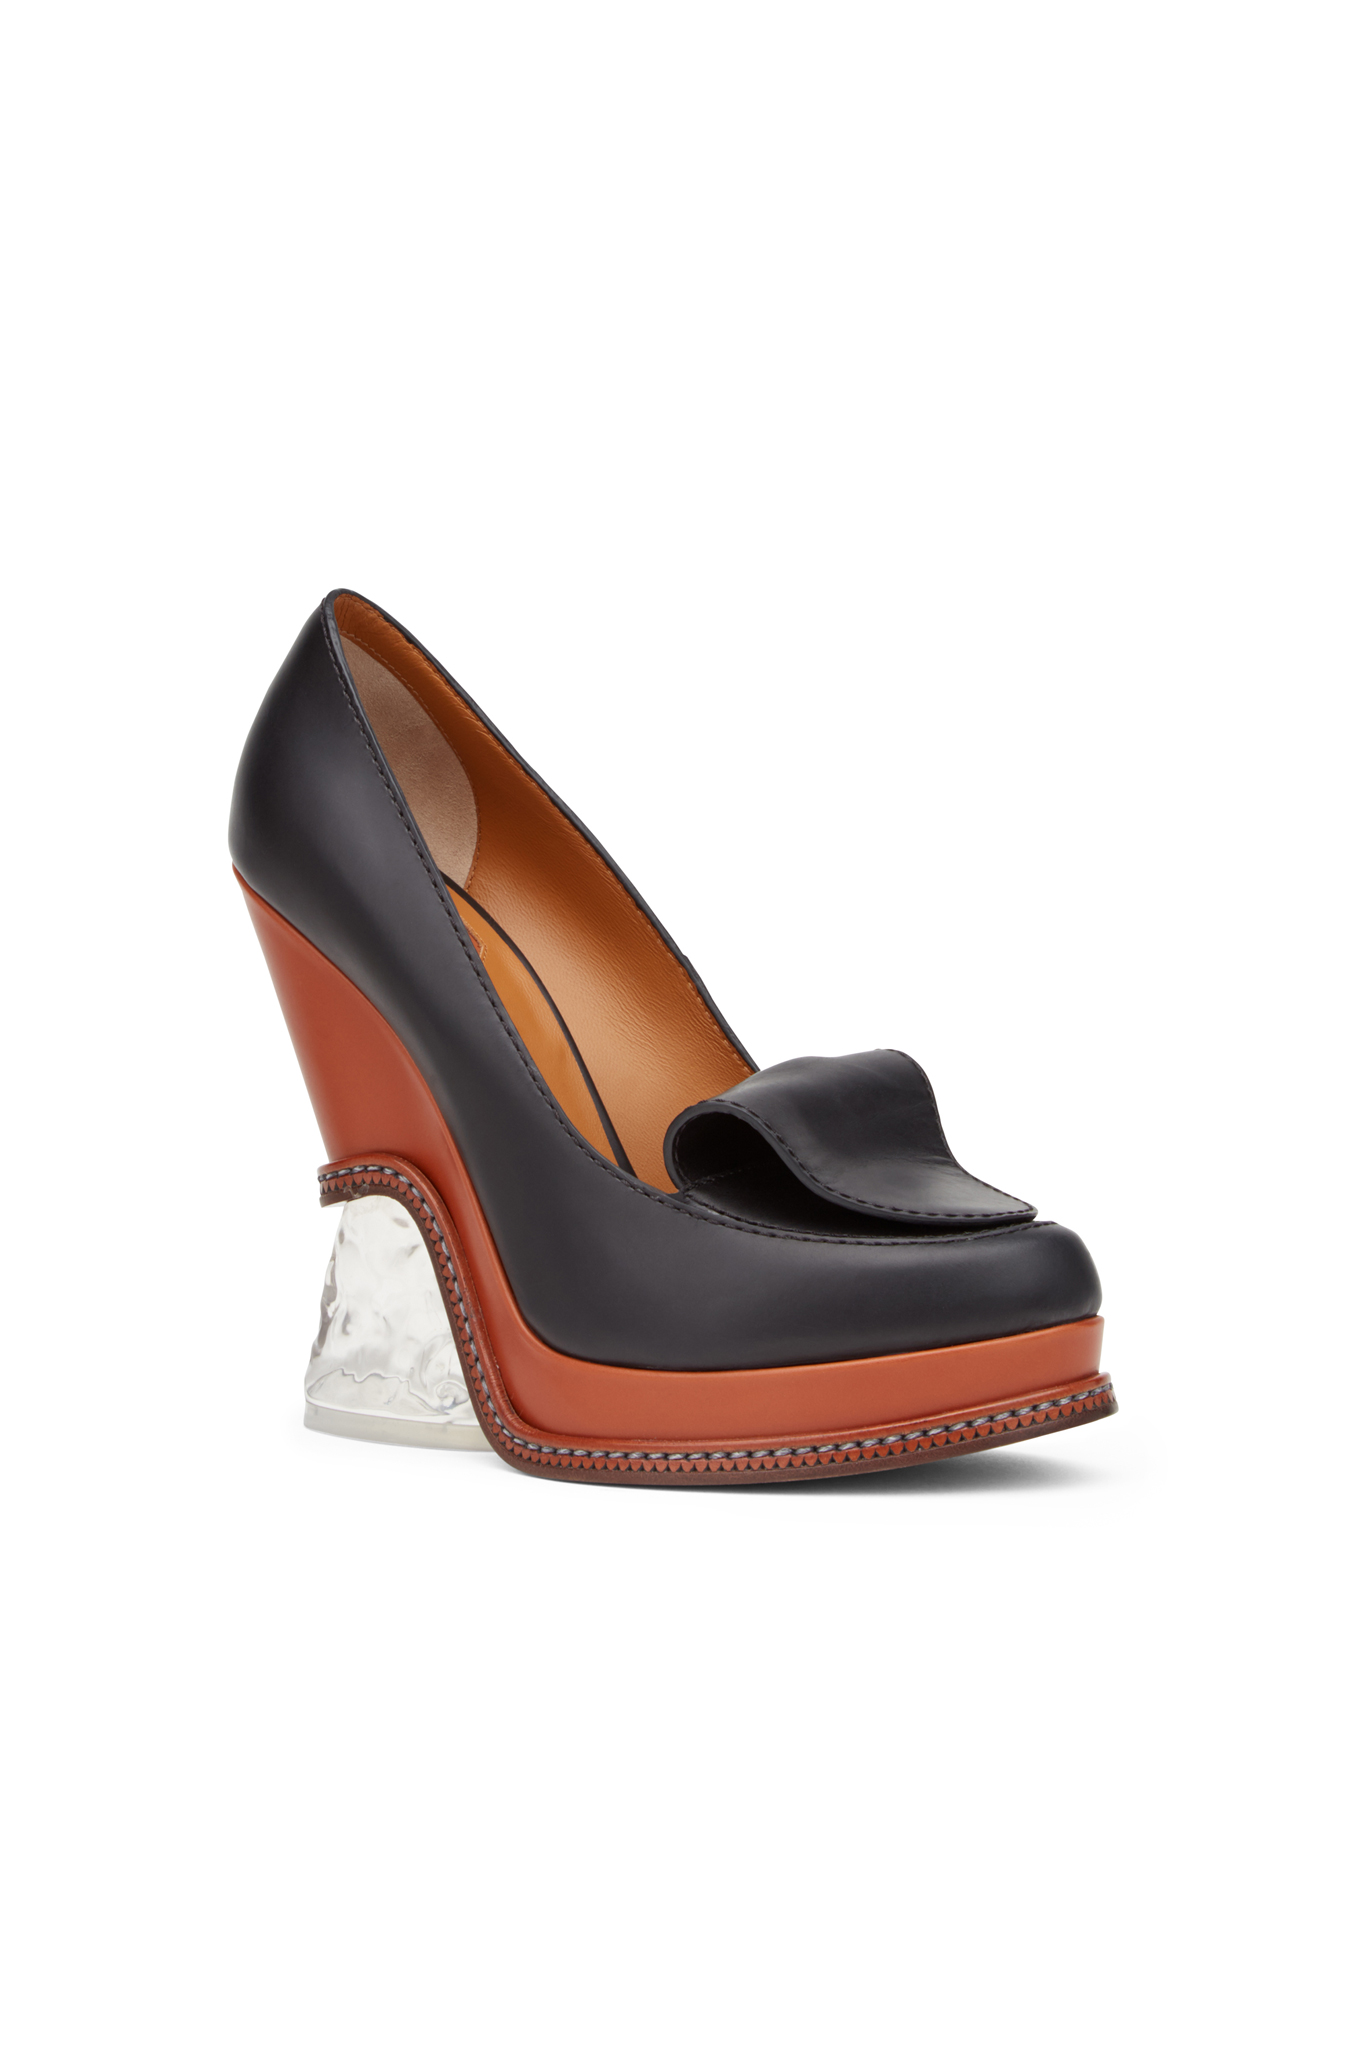 04-06-accessories-trends-fall-2015-lucite-heel.jpg